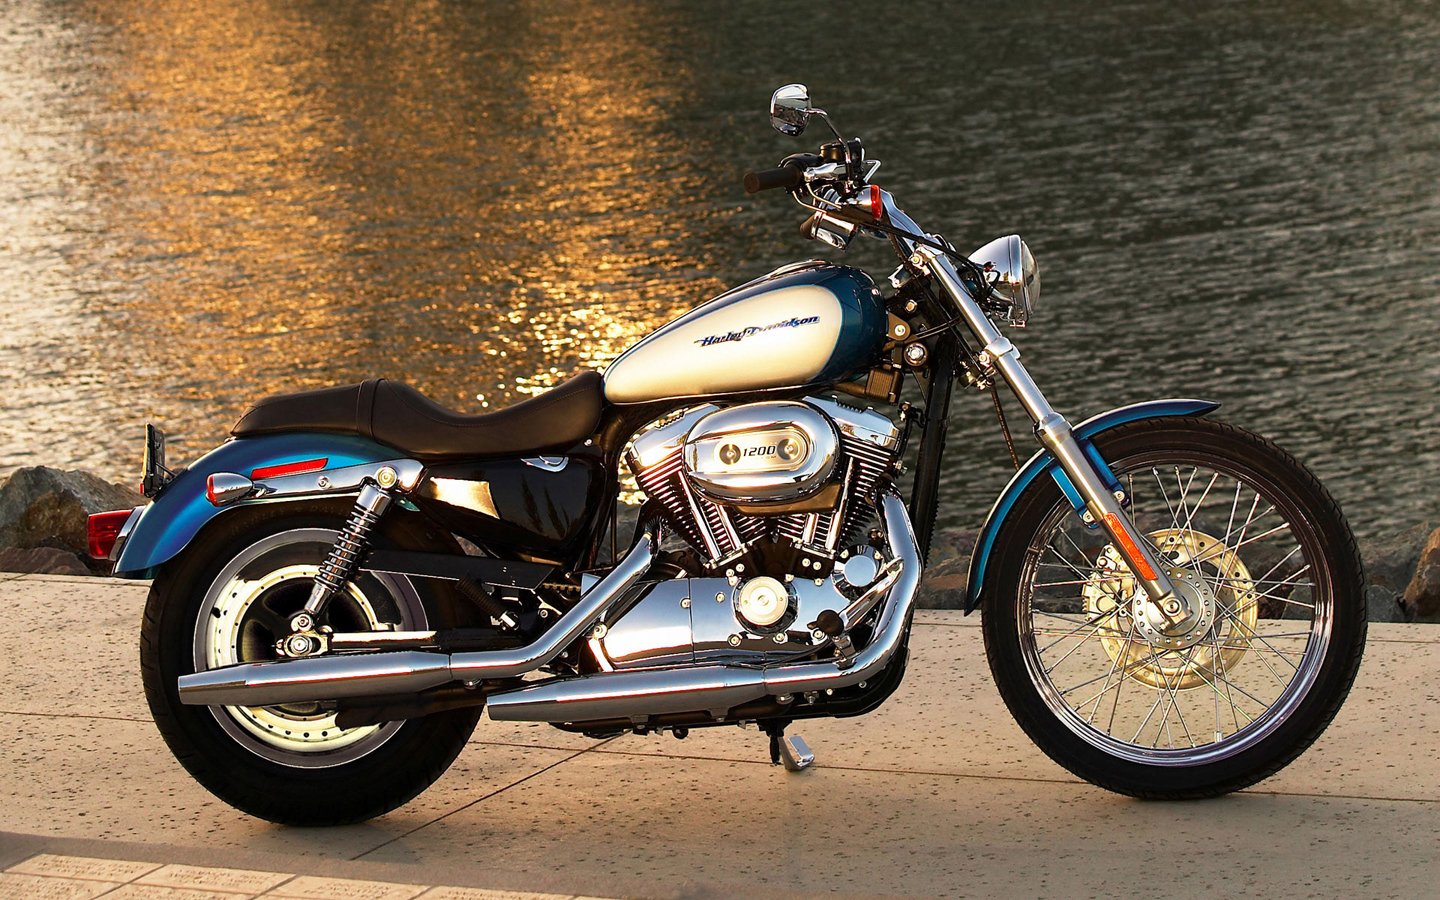 Harley Davidson Motorcycles Backgrounds